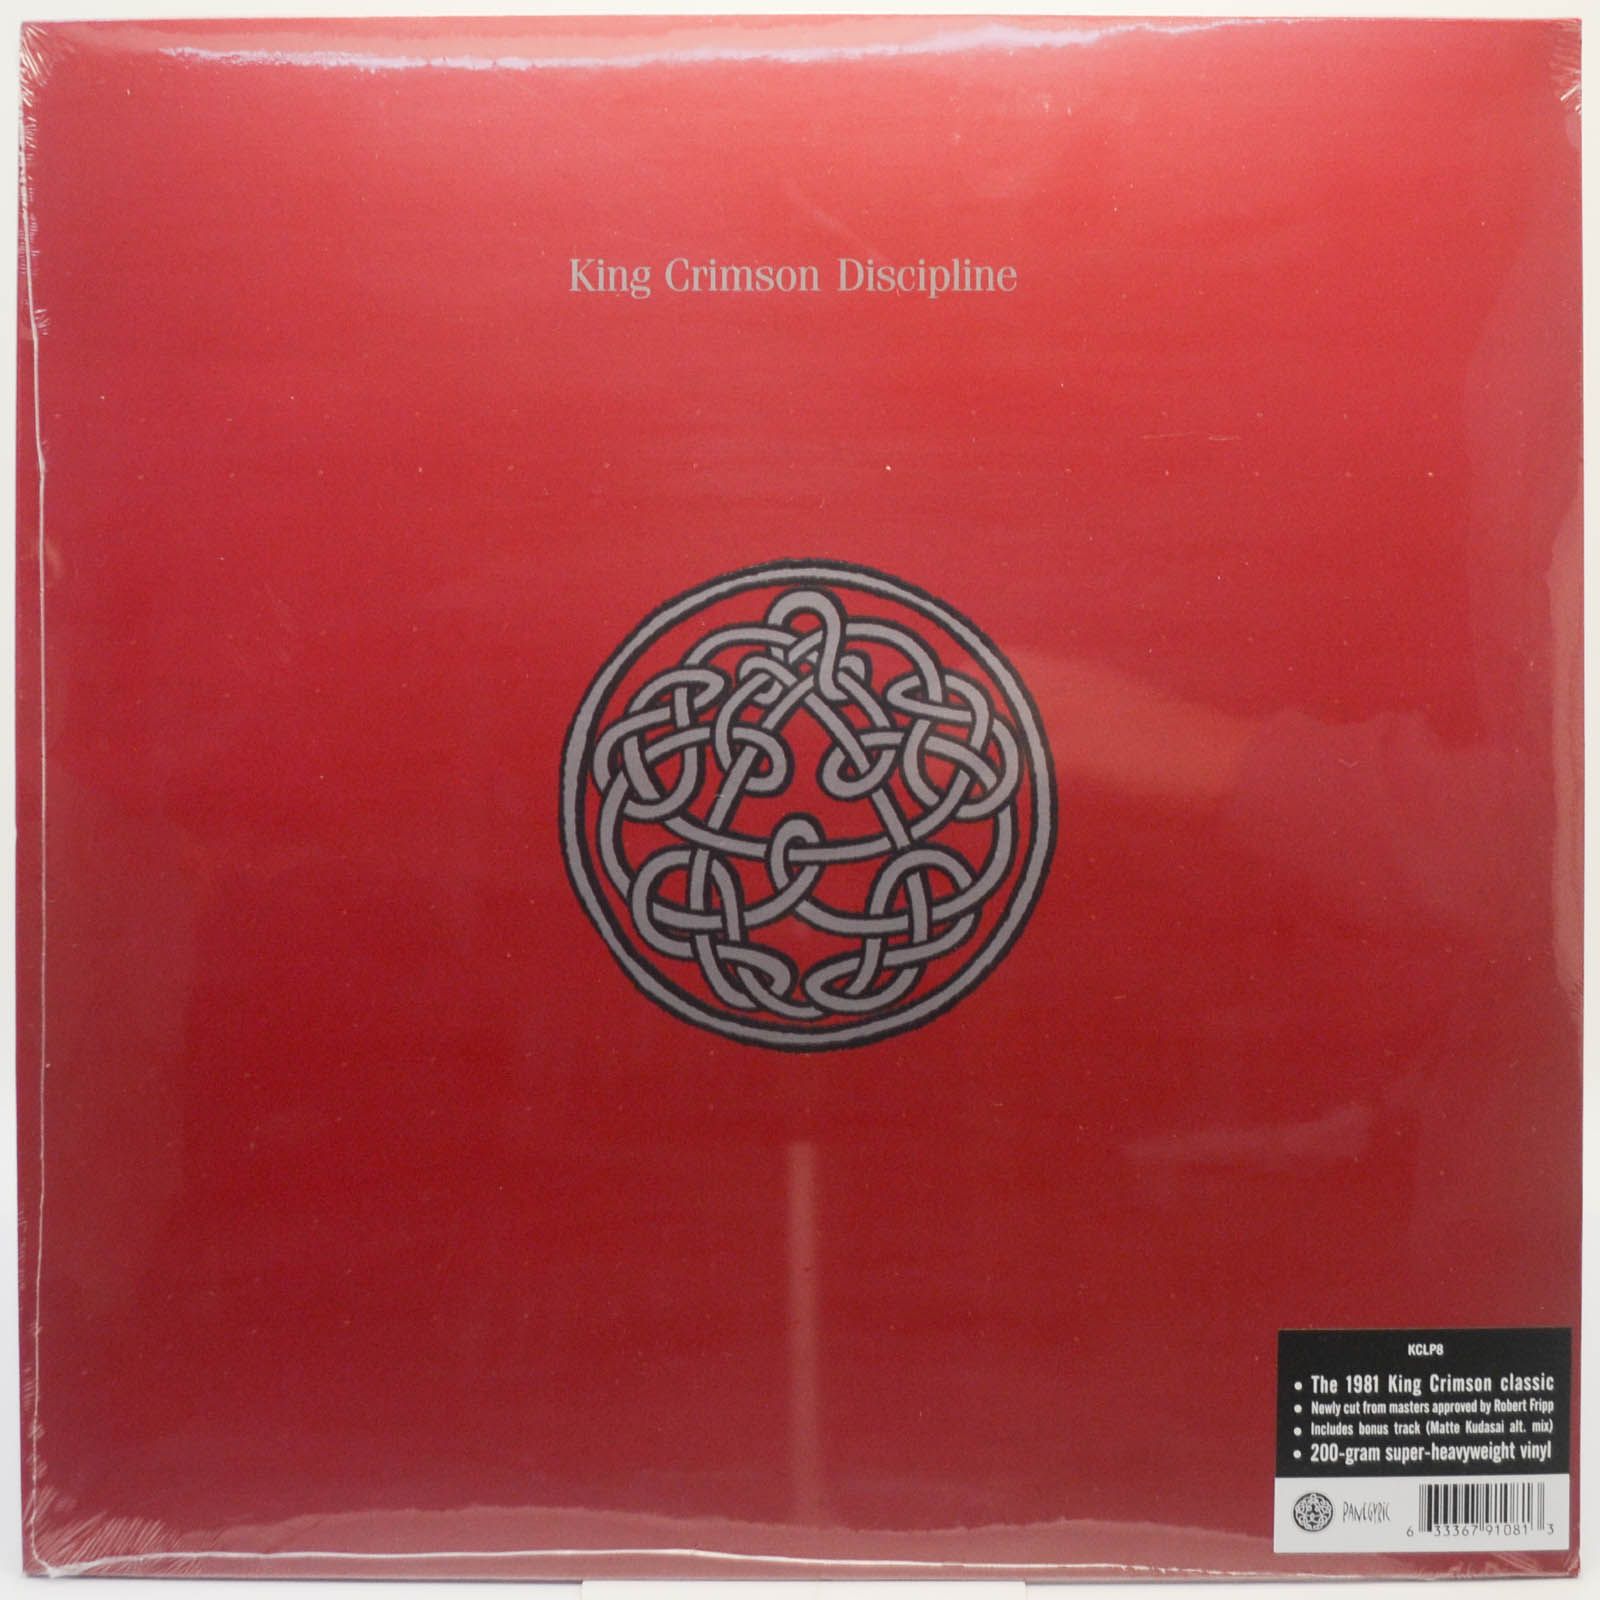 King Crimson — Discipline, 1981